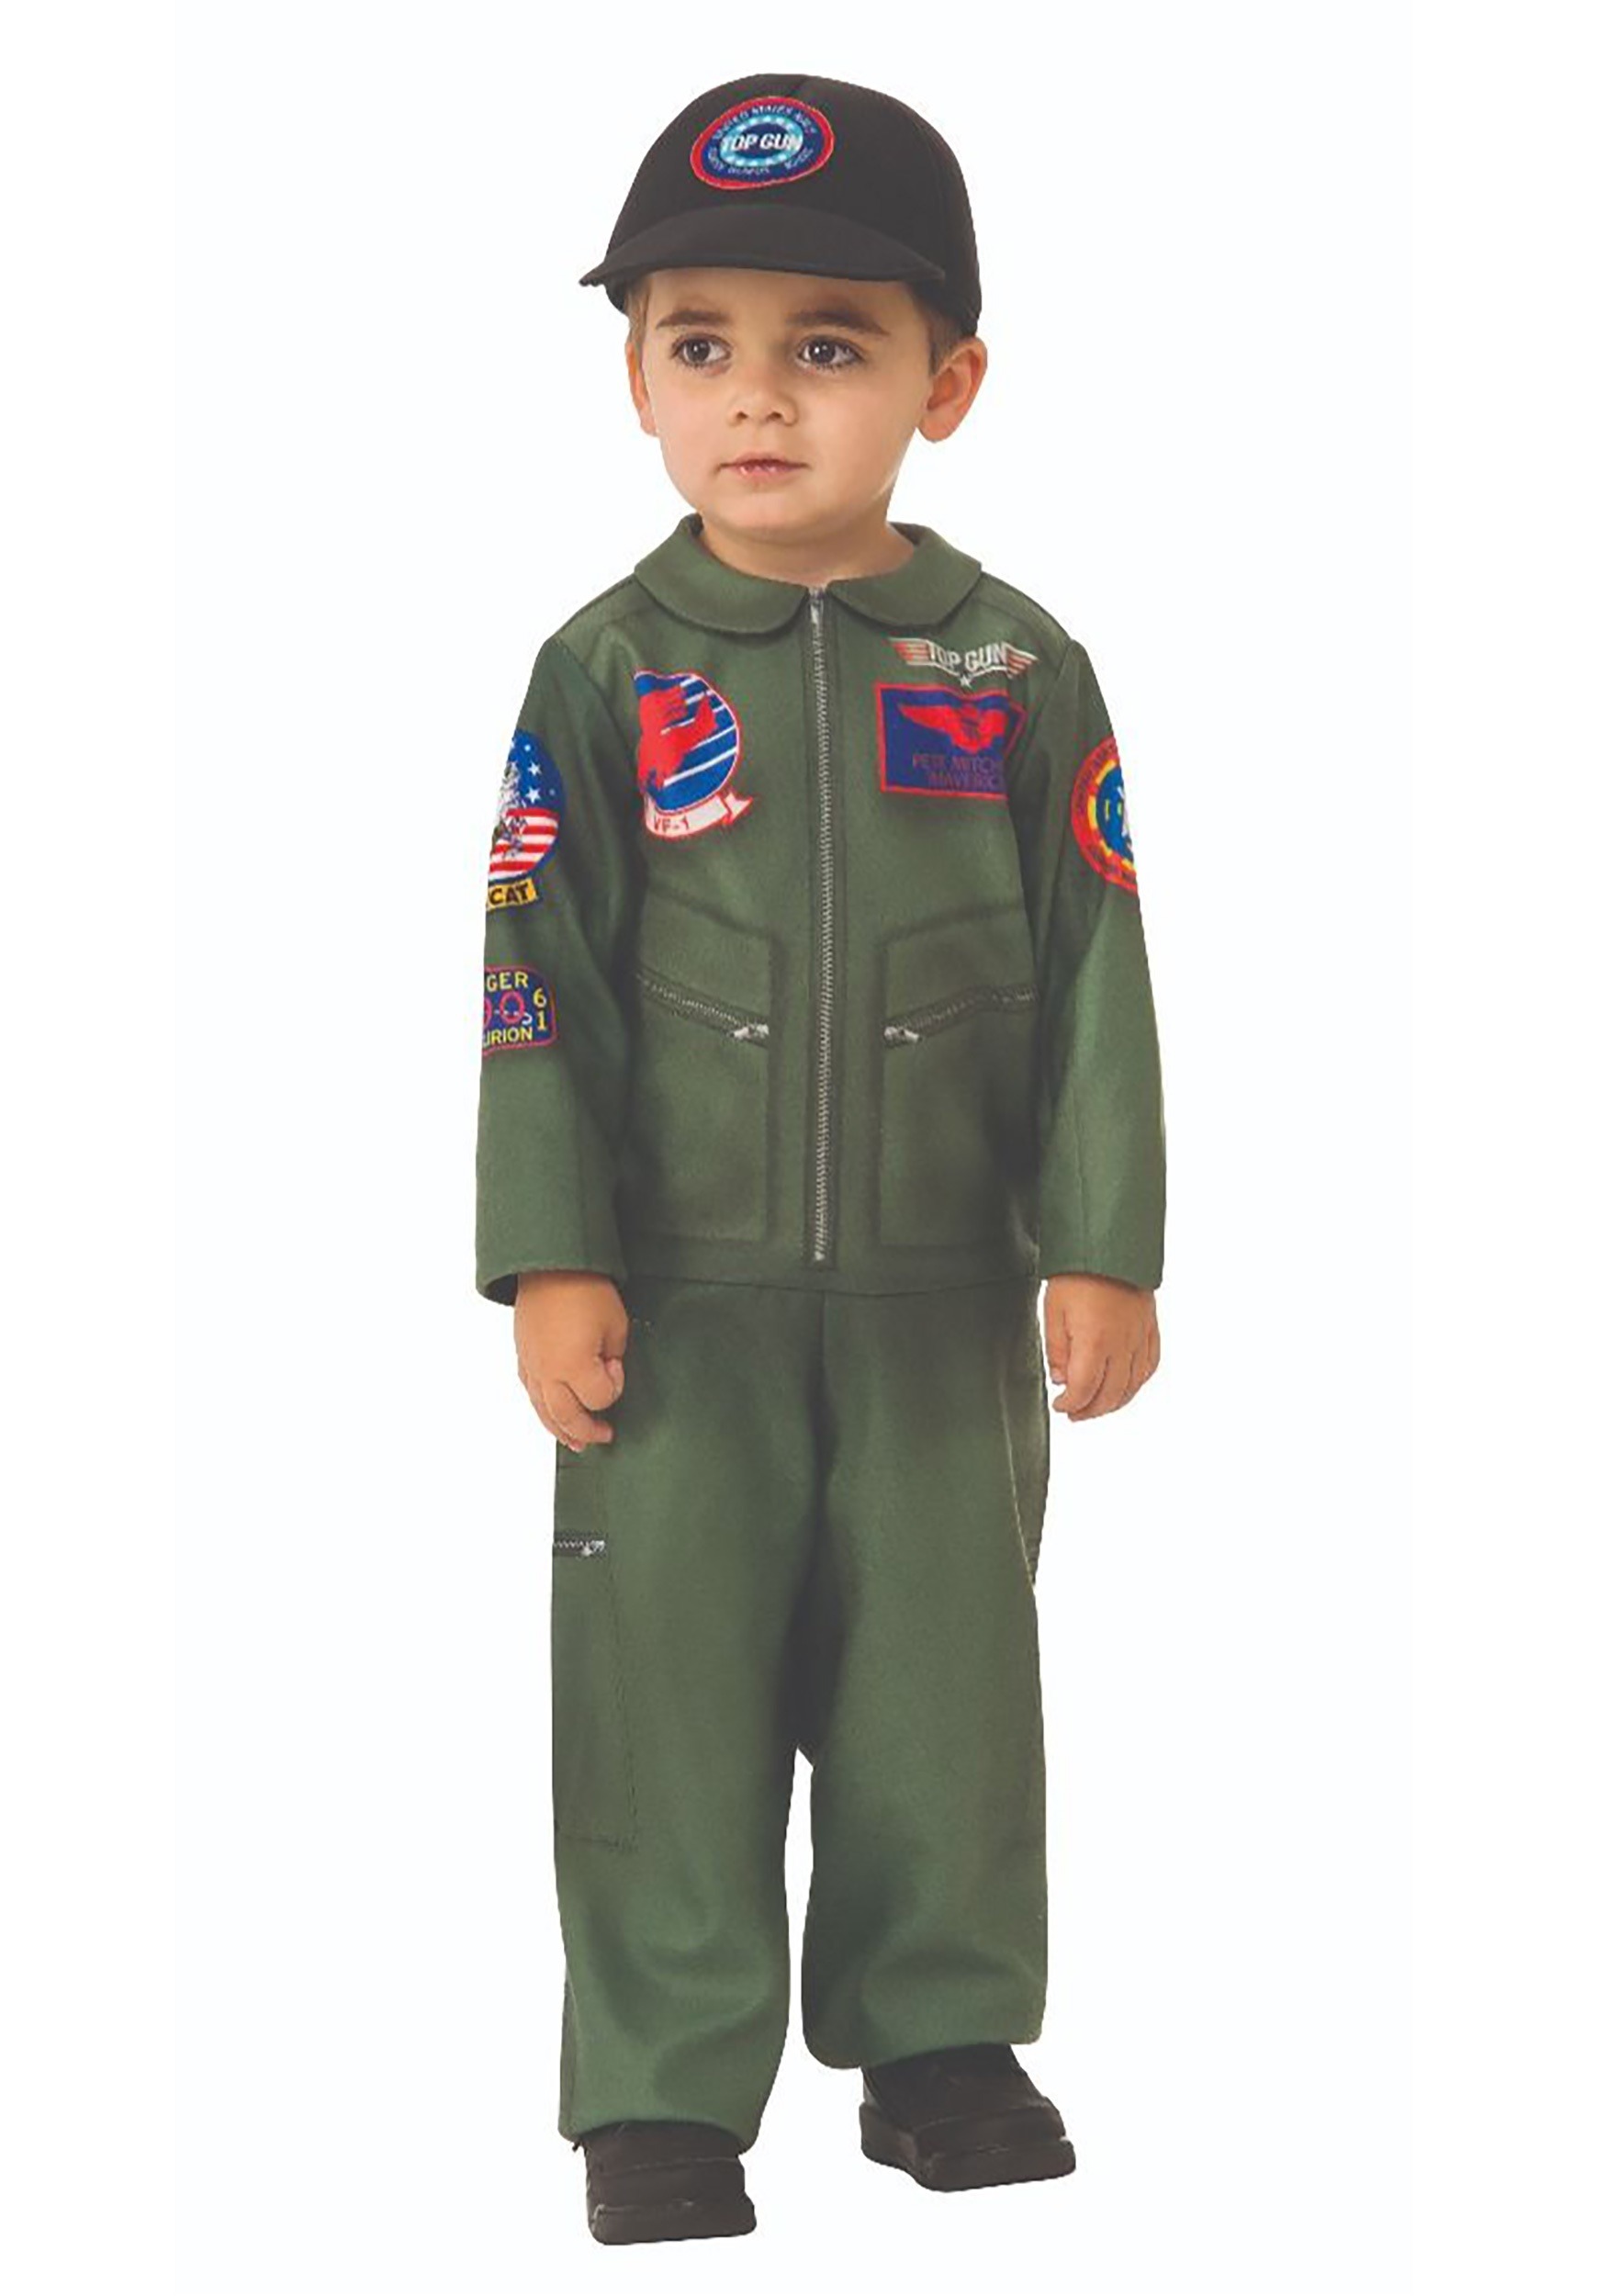 Top Gun Toddler Costume